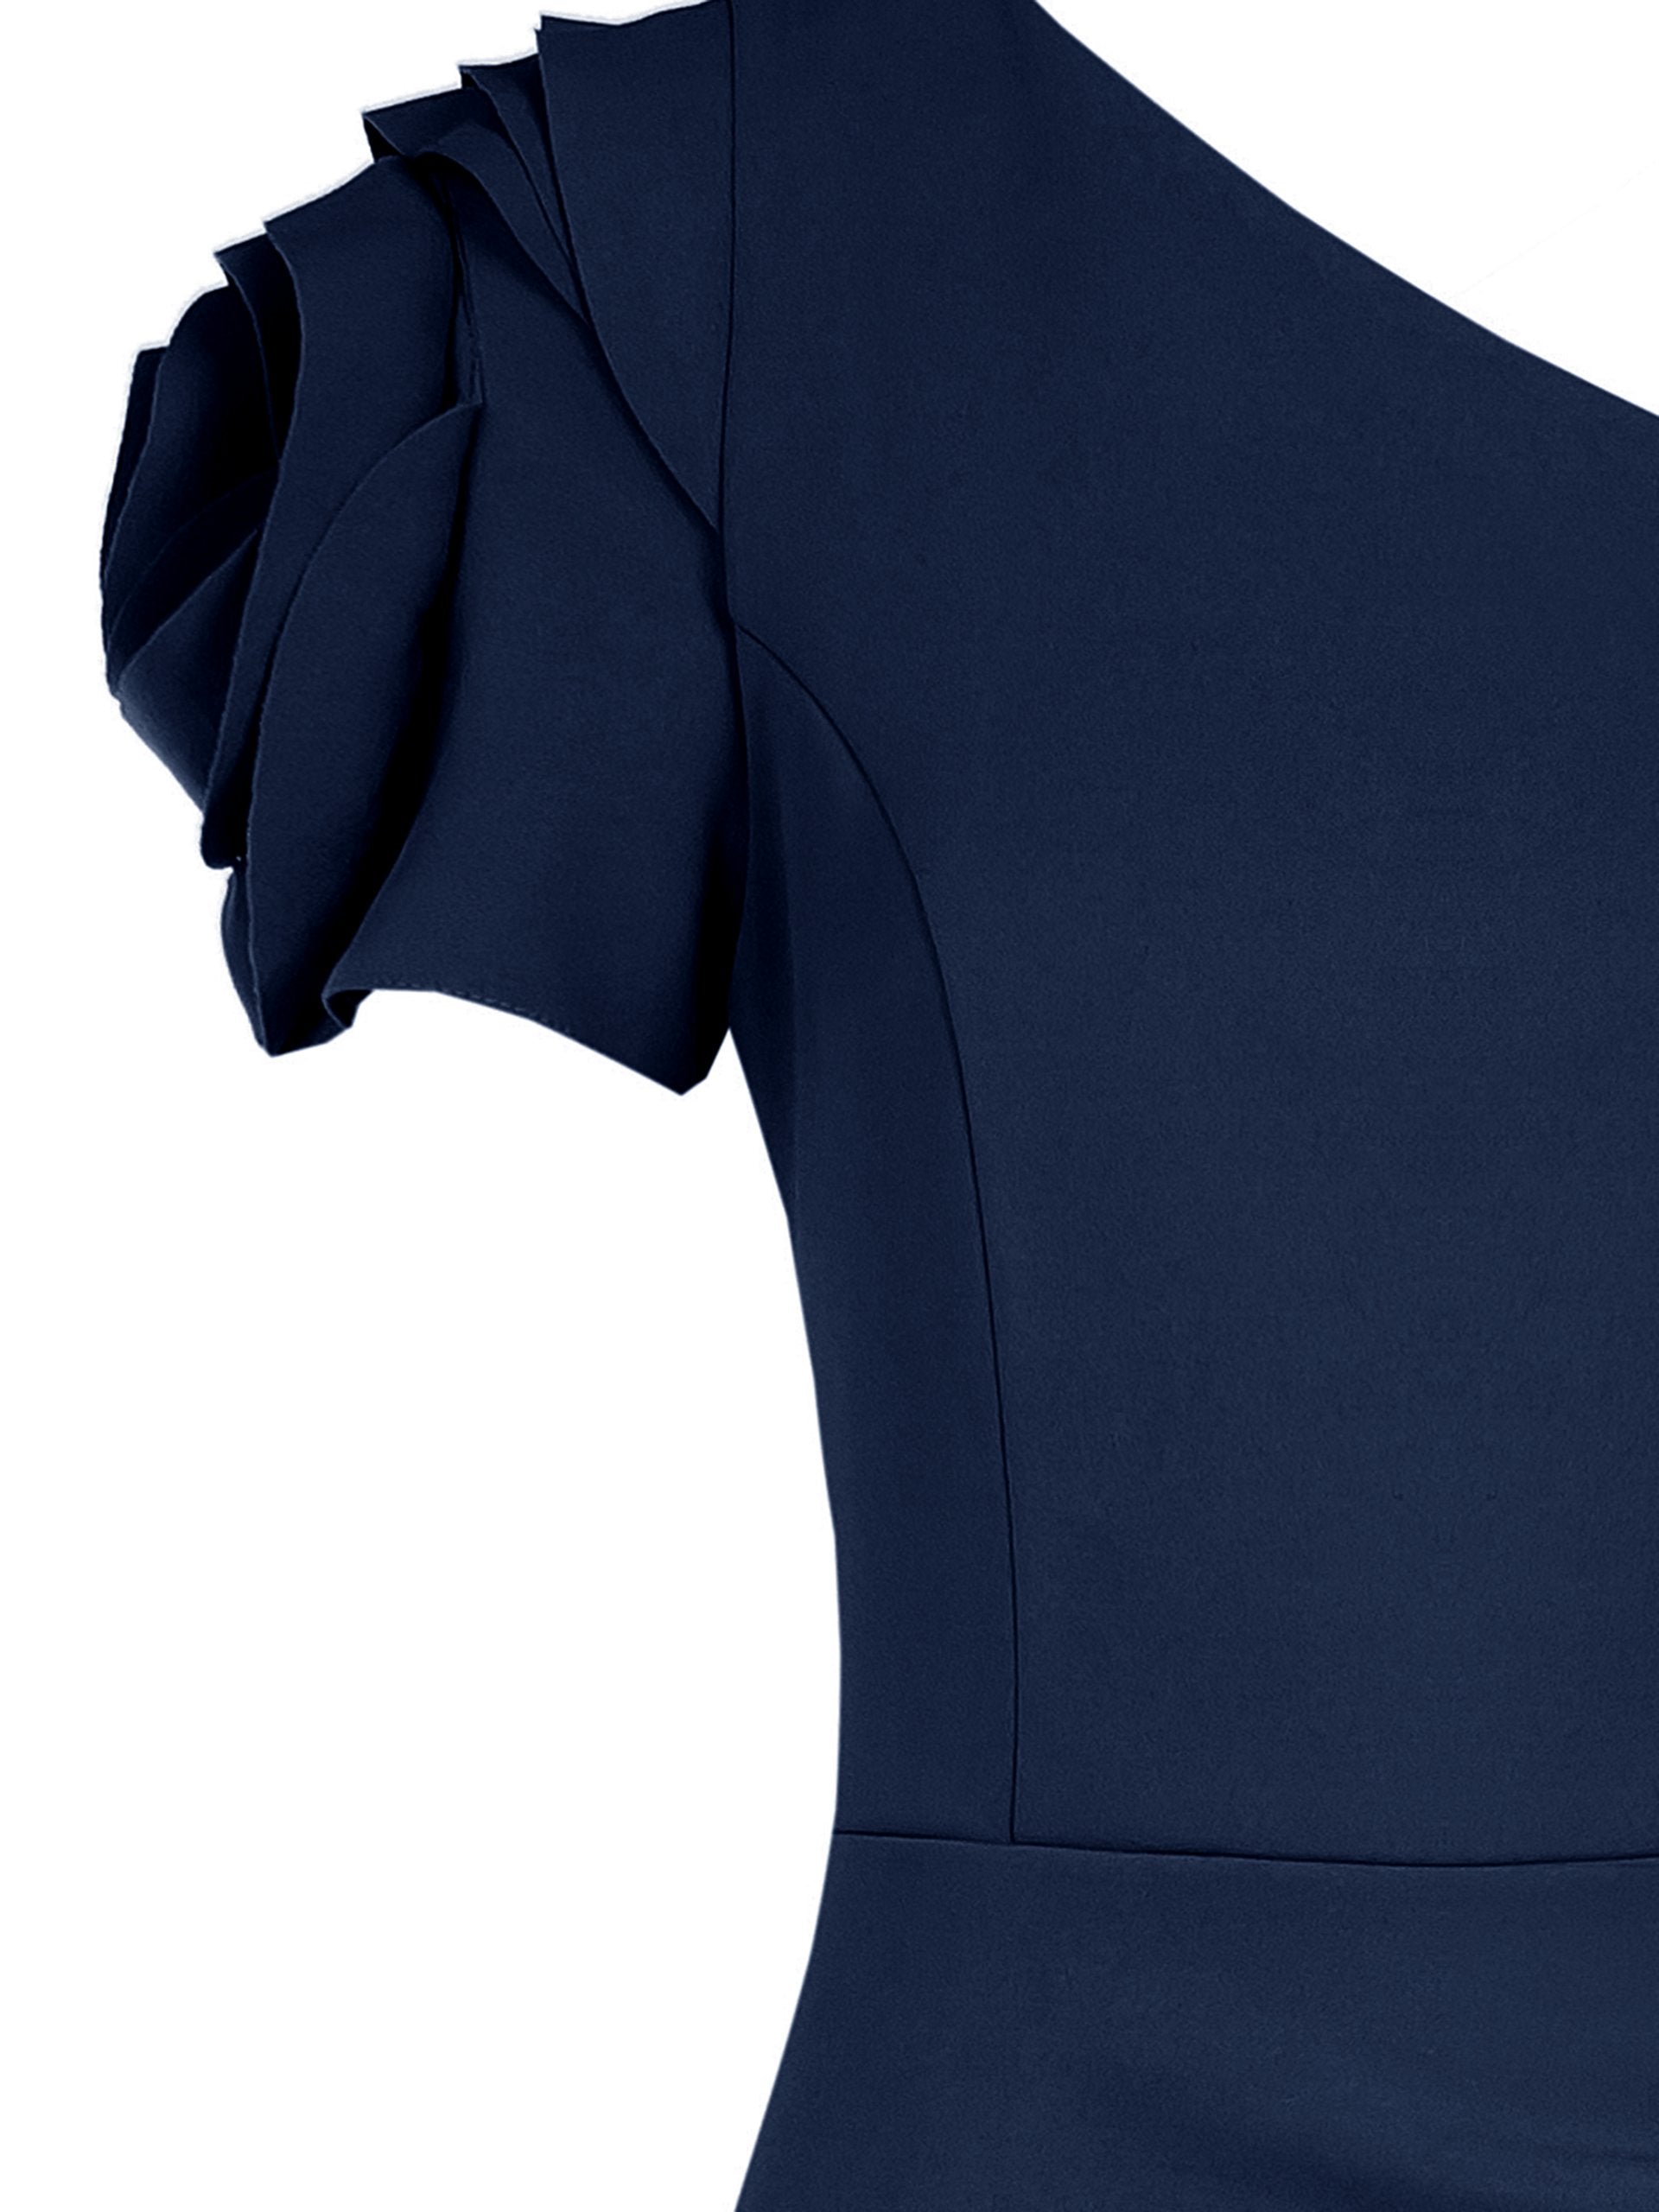 AVALON One-Shoulder Maxi Dress